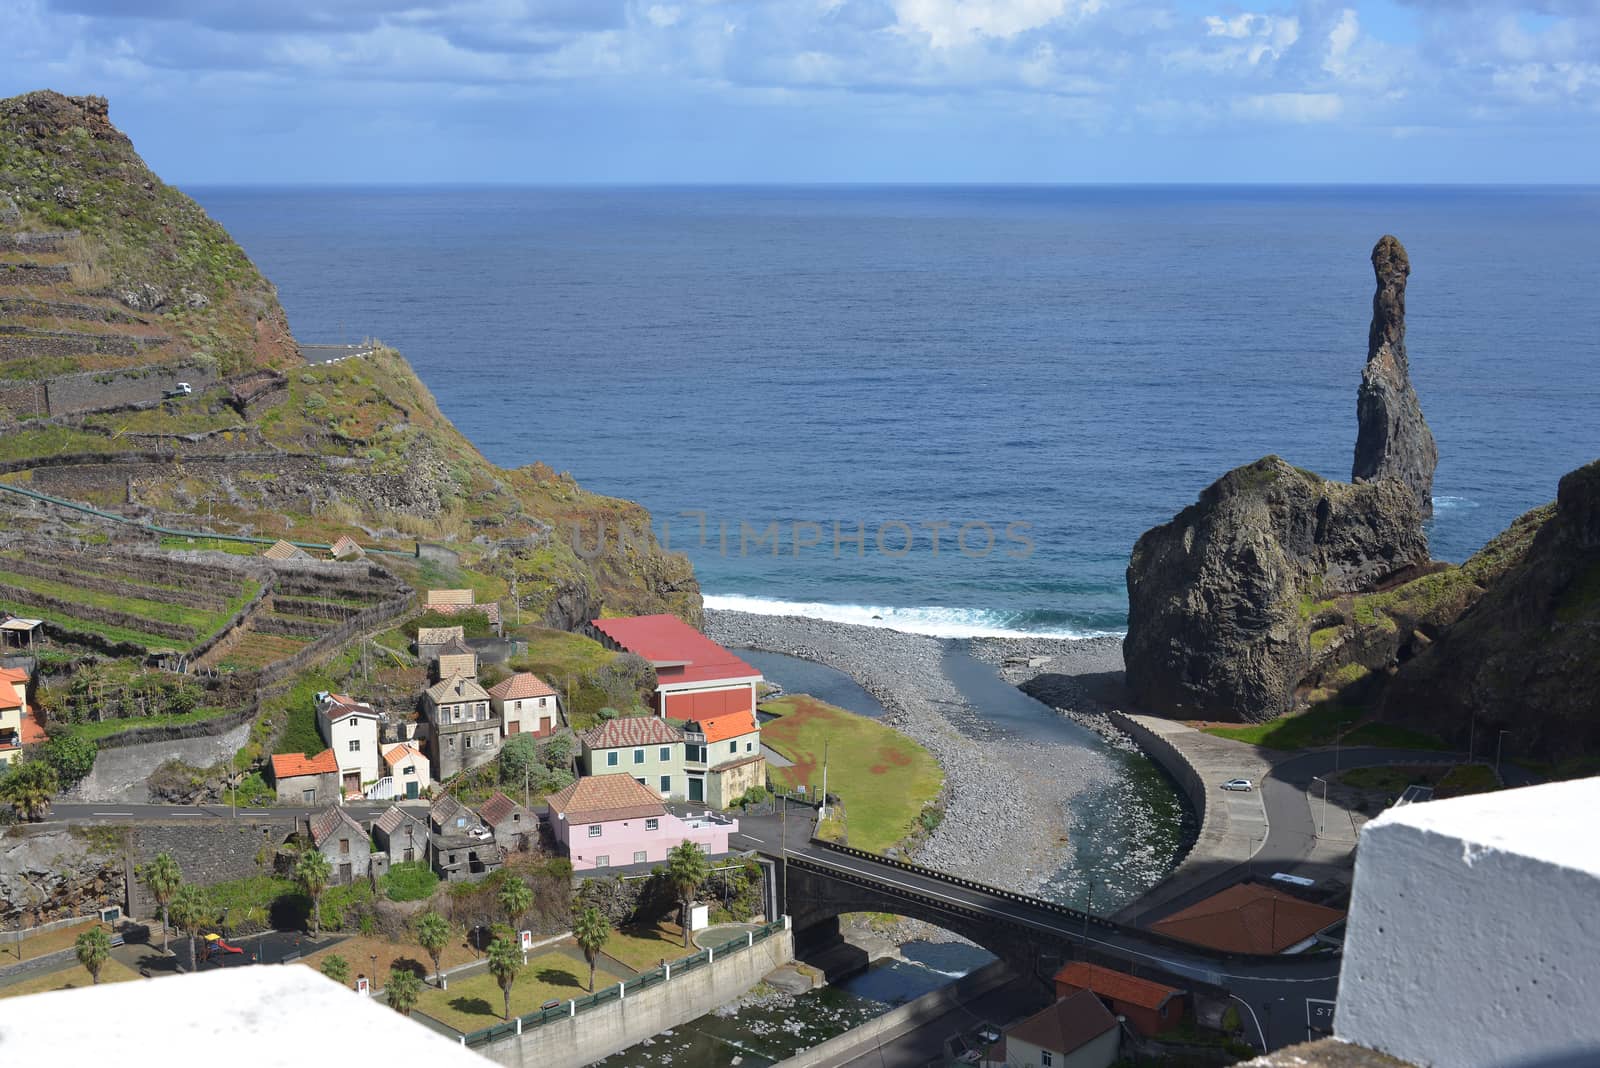 northern coastline of Madeira by compuinfoto